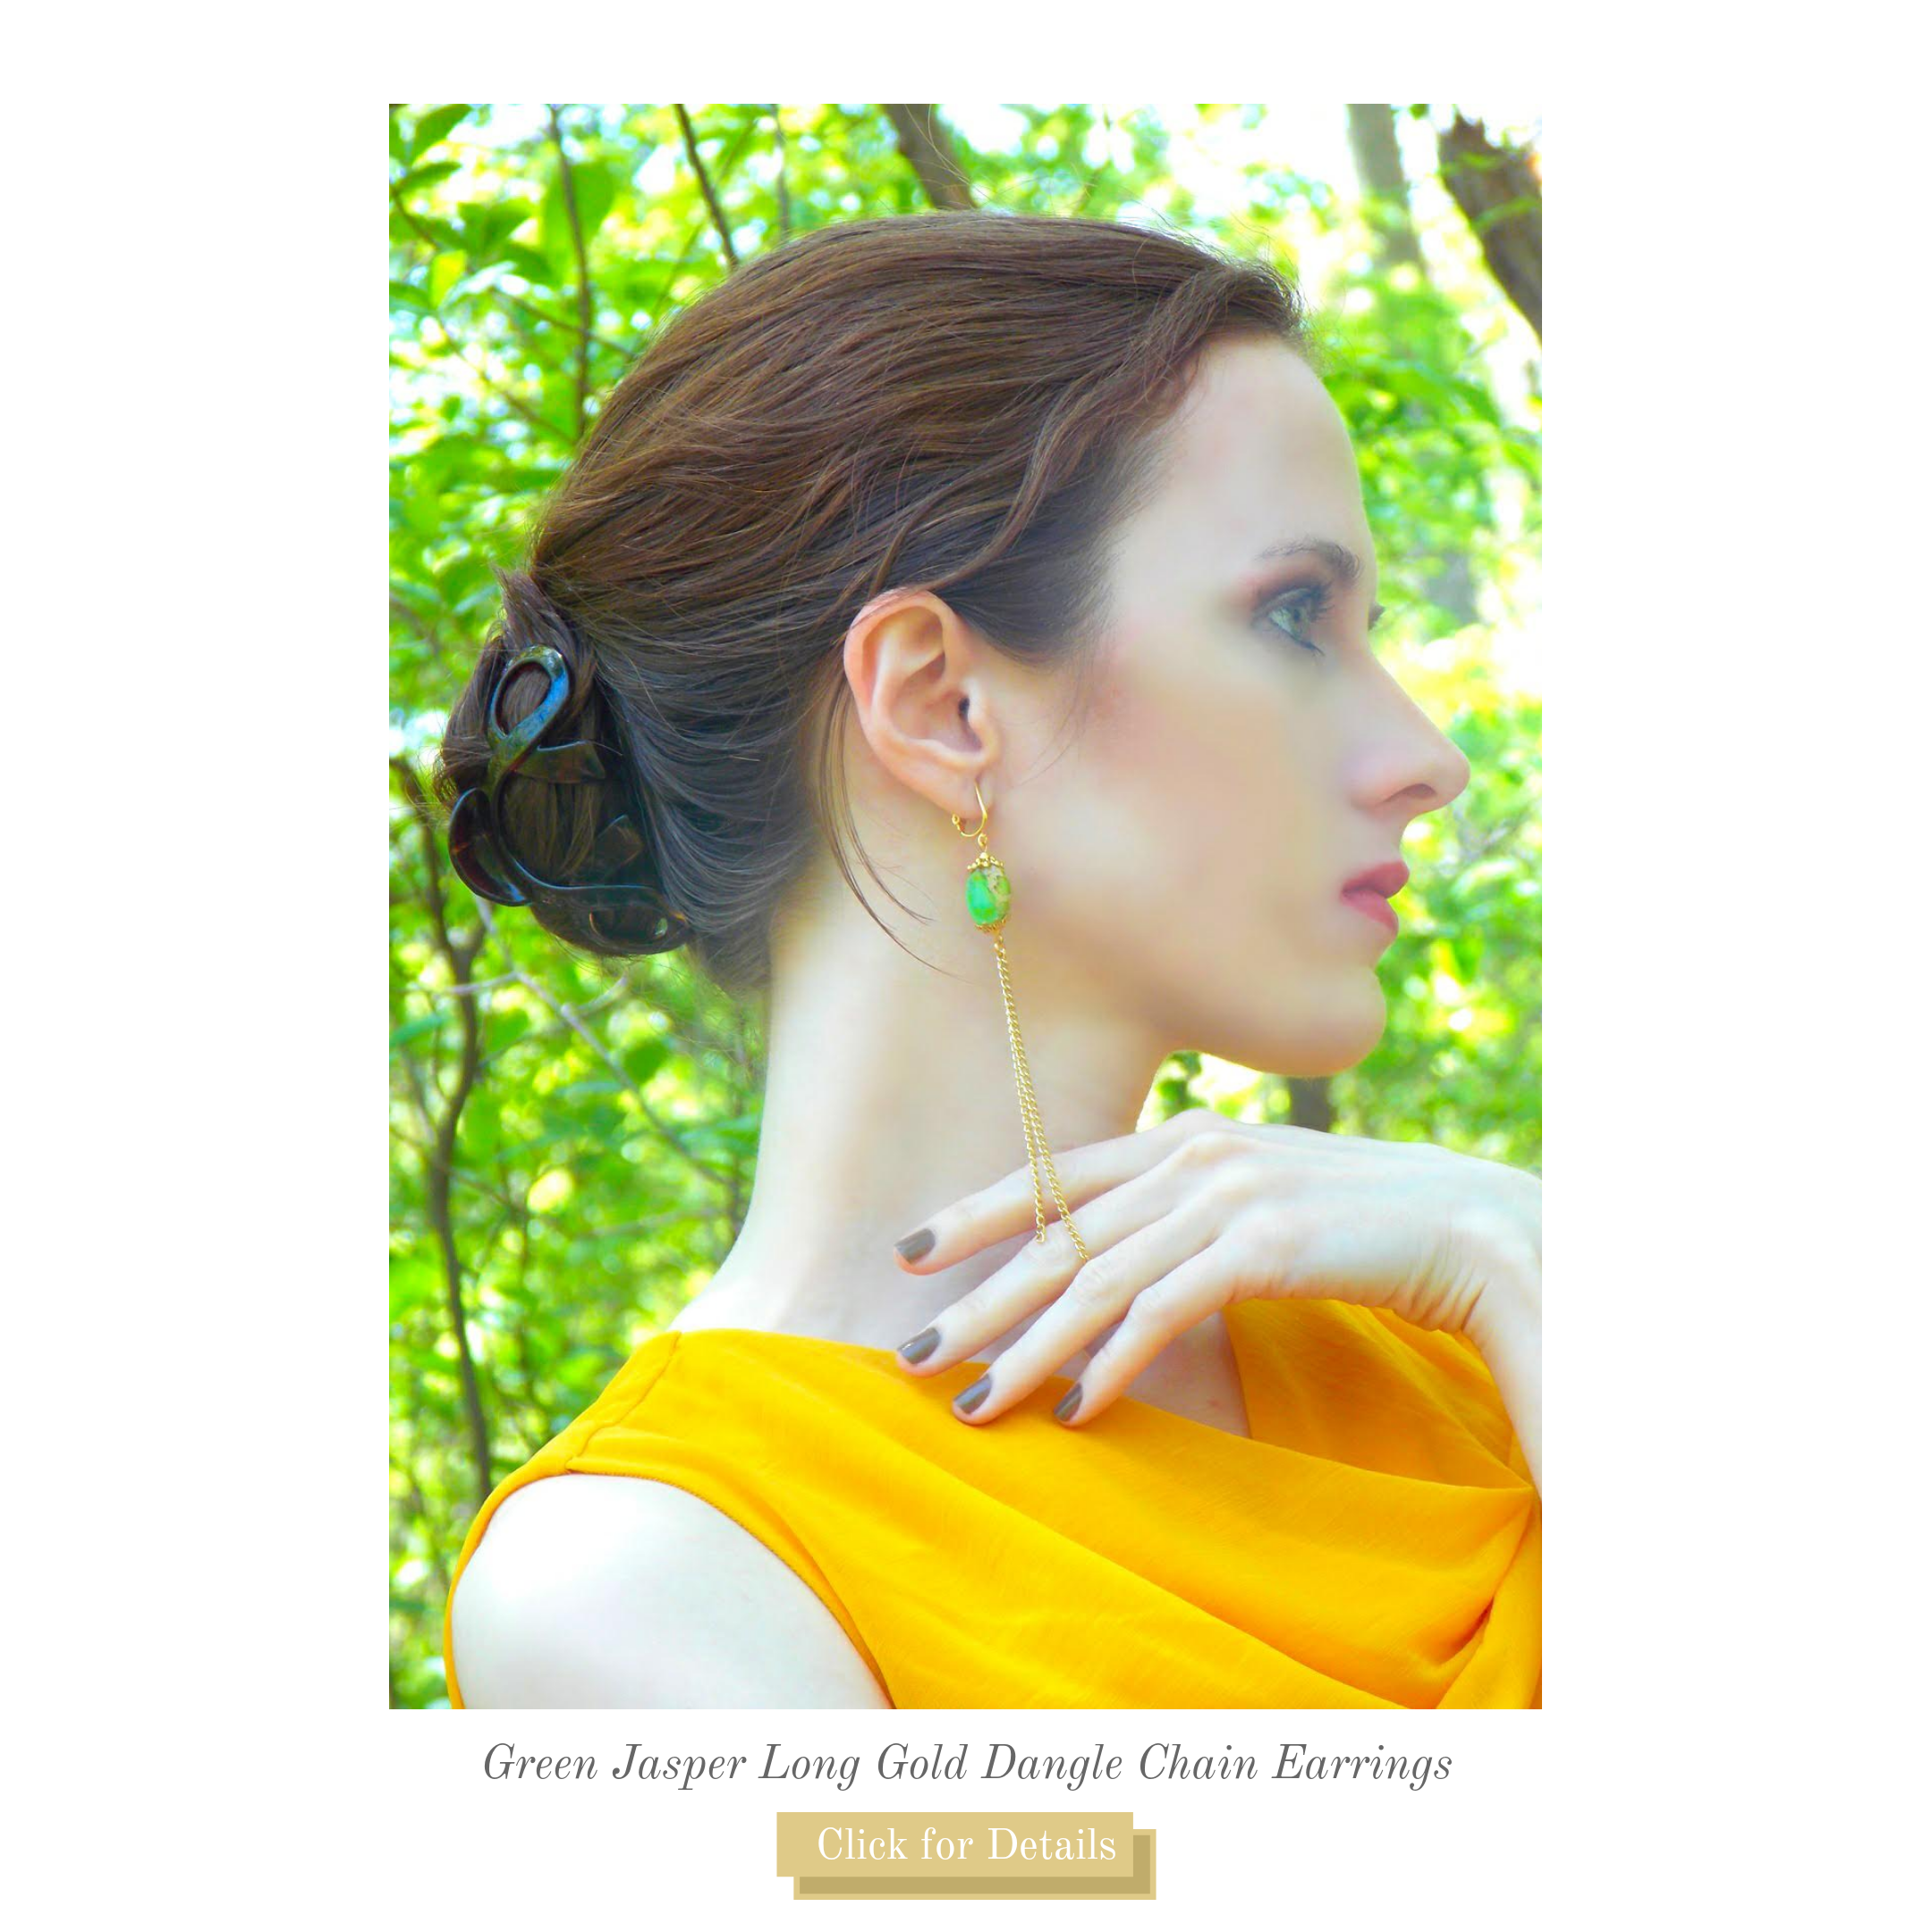 Green Jasper Long Gold Dangle Chain Earrings by KMagnifiqueDesigns